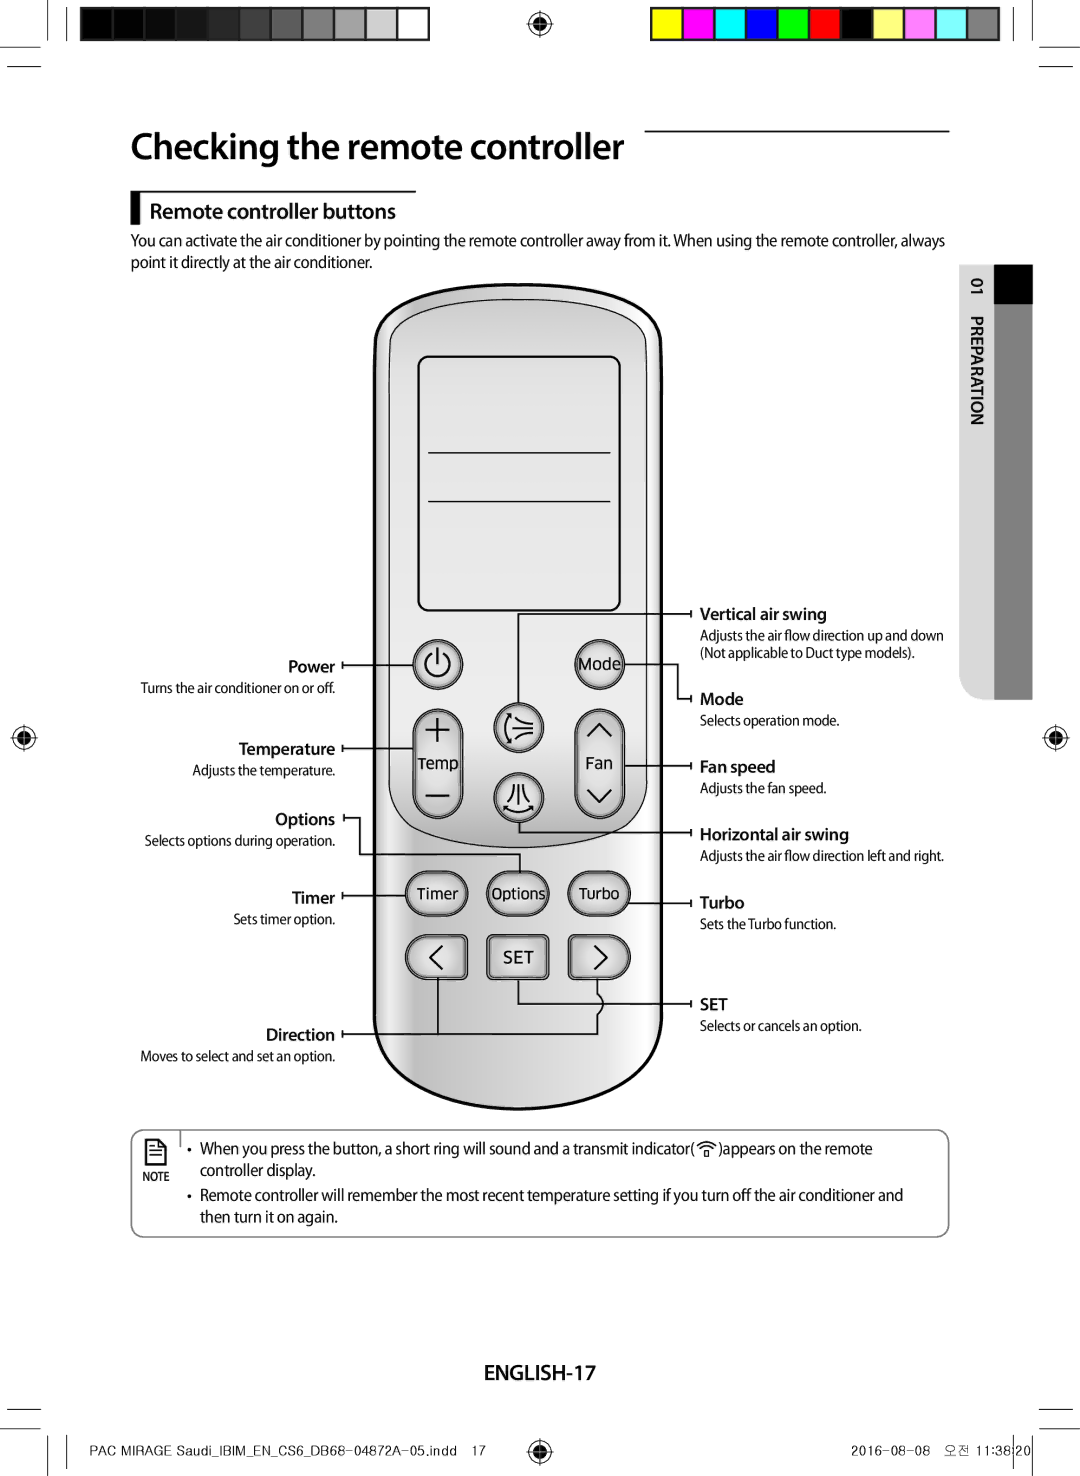 Samsung AF55JV1MAEENMG, AF55JV1MAAPNMG manual Checking the remote controller, Remote controller buttons, ENGLISH-17 